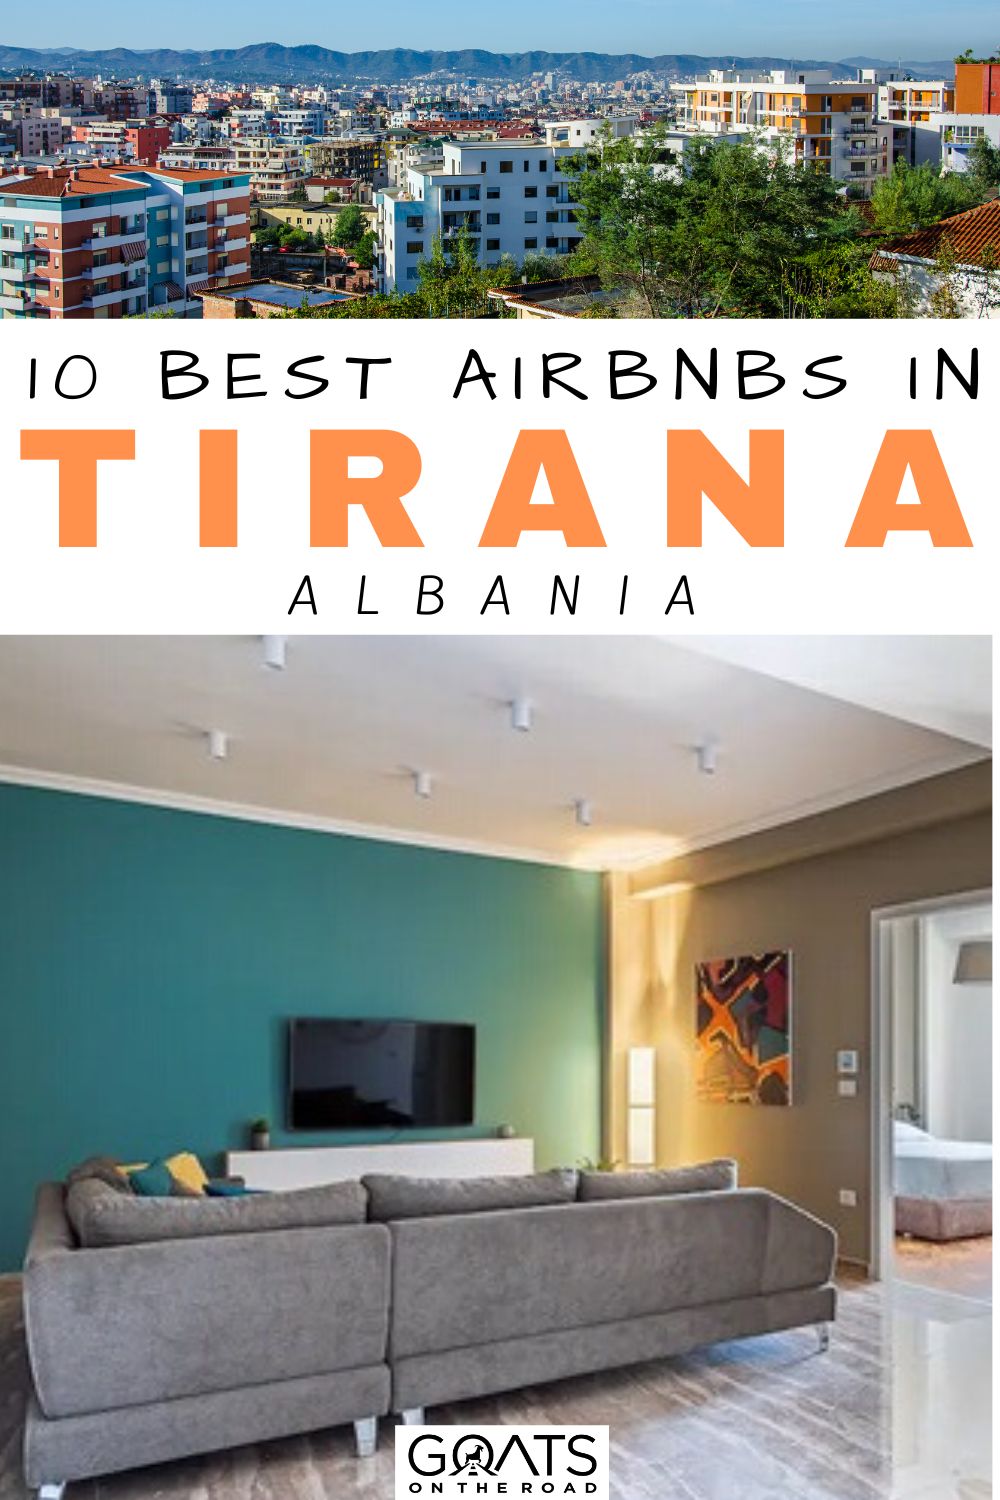 “10 Best Airbnbs in Tirana, Albania